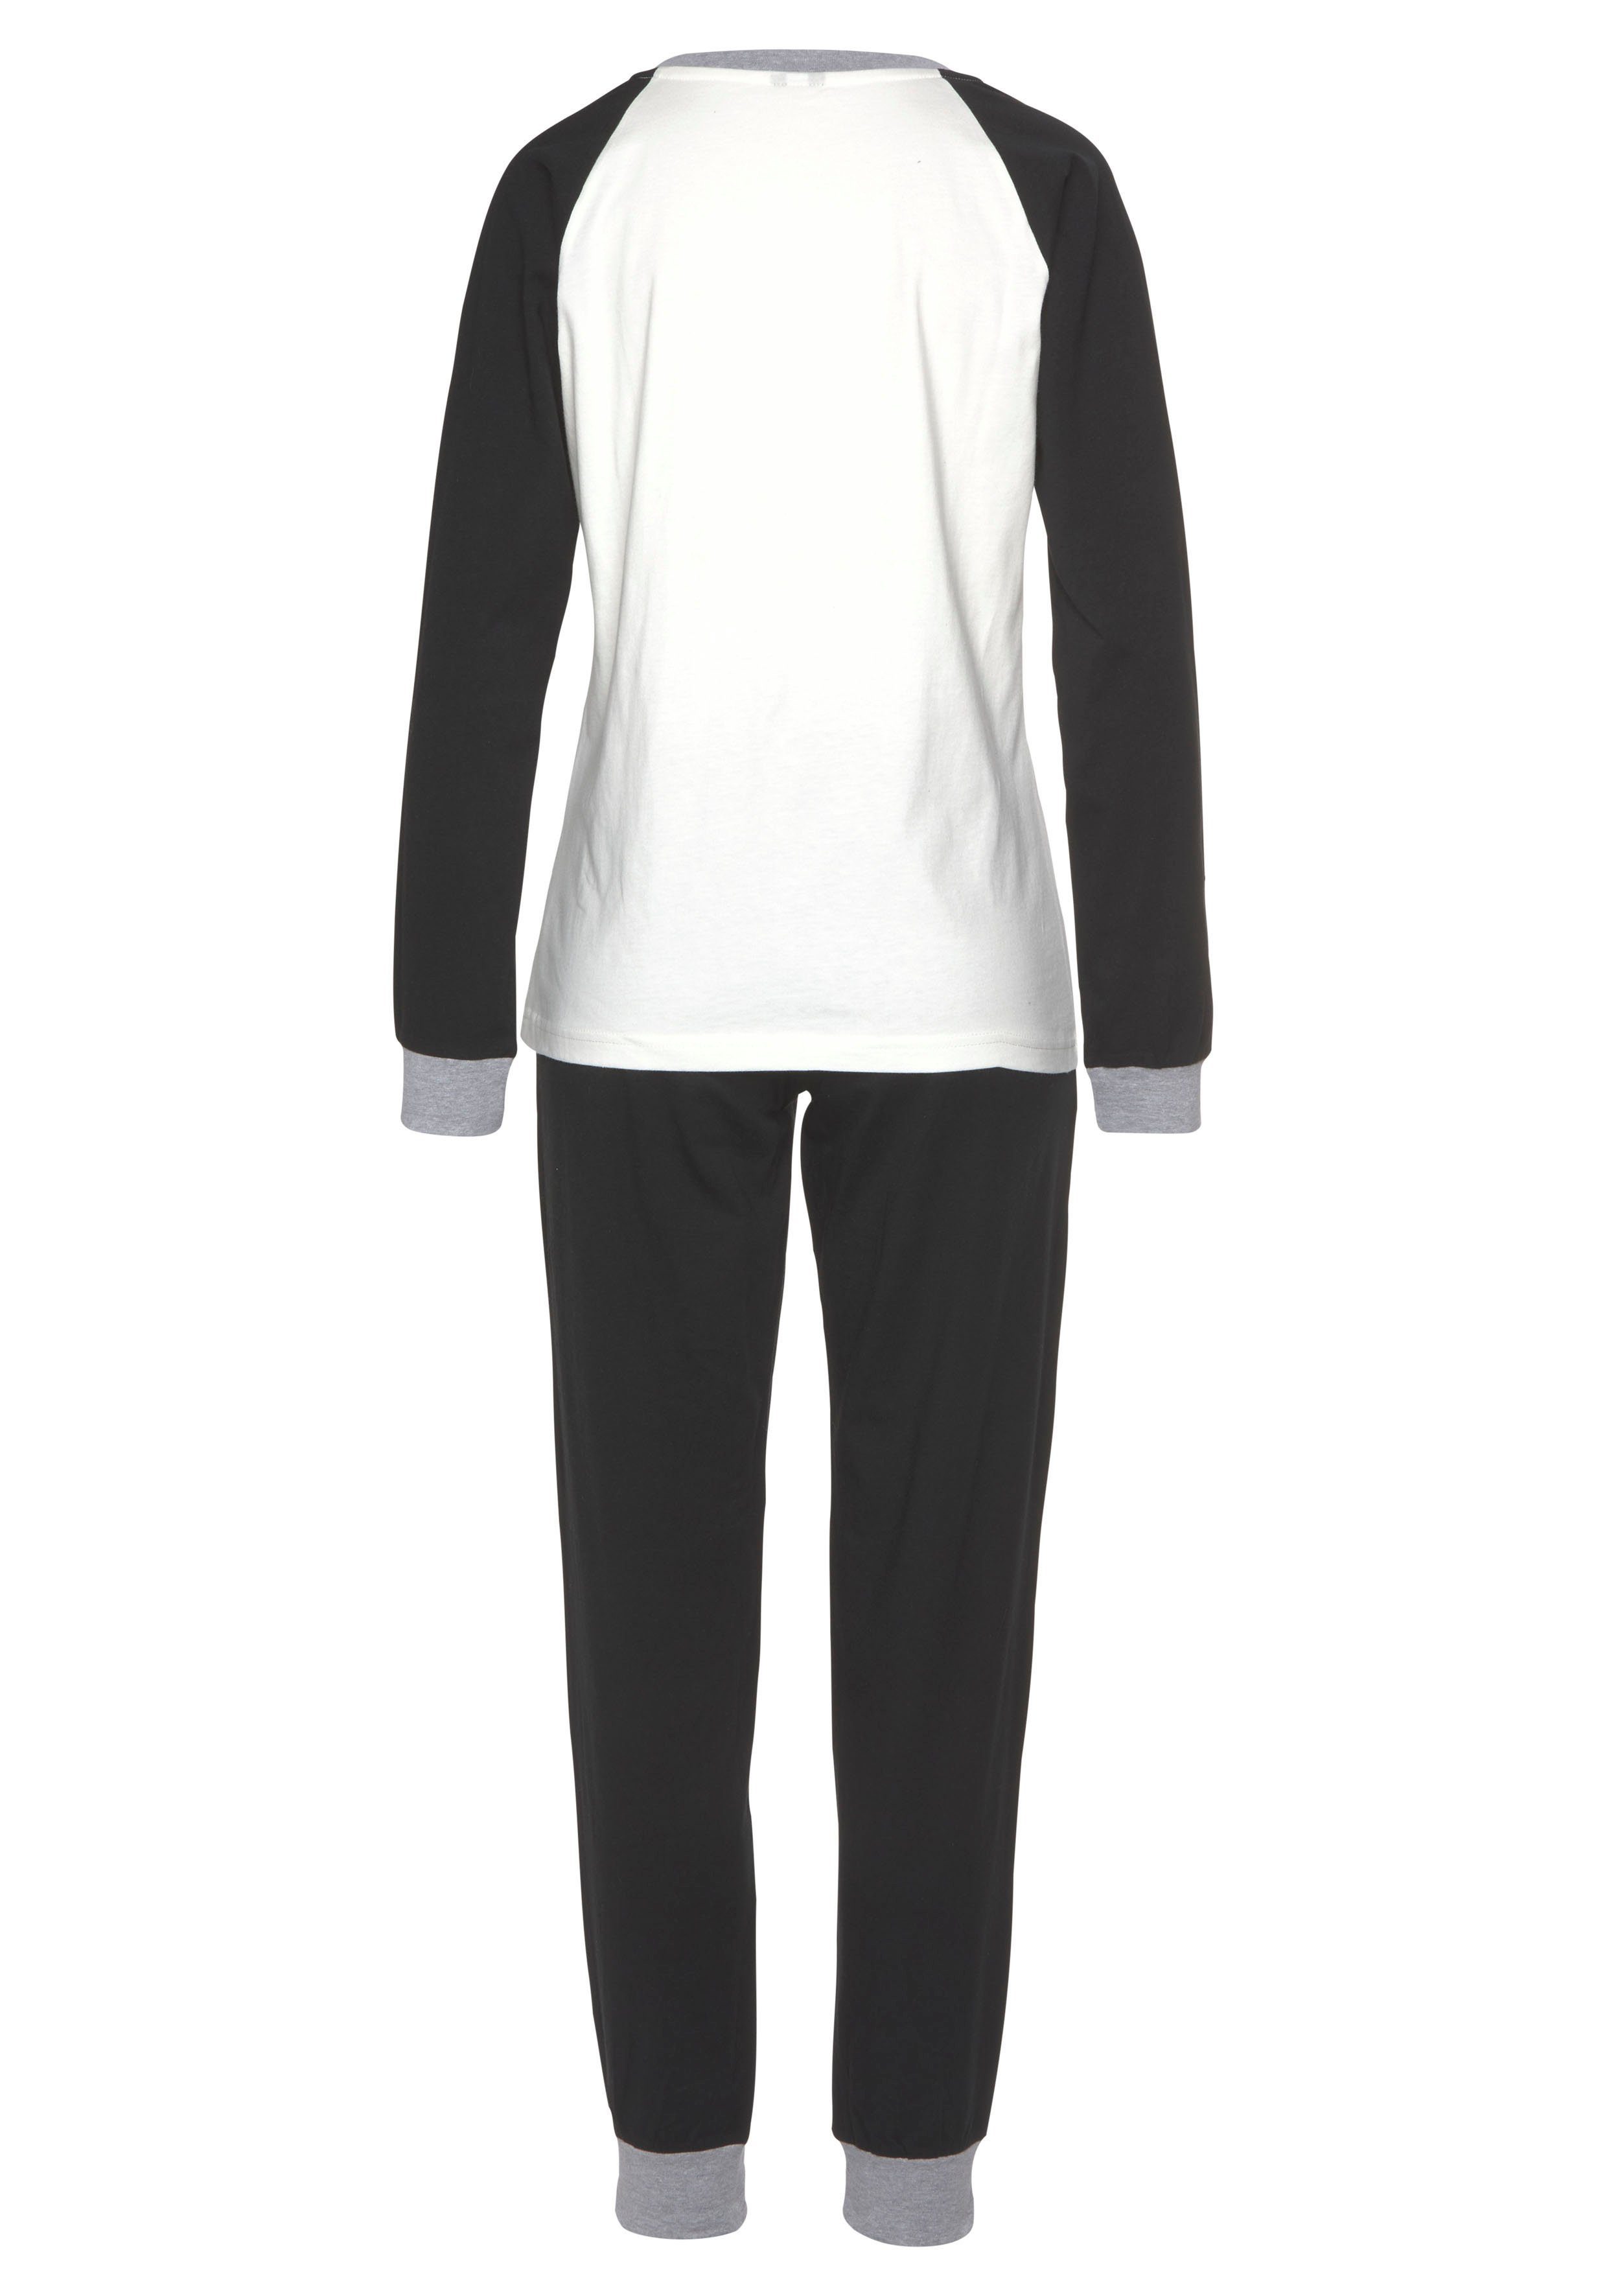 kontrastfarbenen mit 1 Stück) Raglanärmeln Pyjama tlg., schwarz-weiß (2 KangaROOS